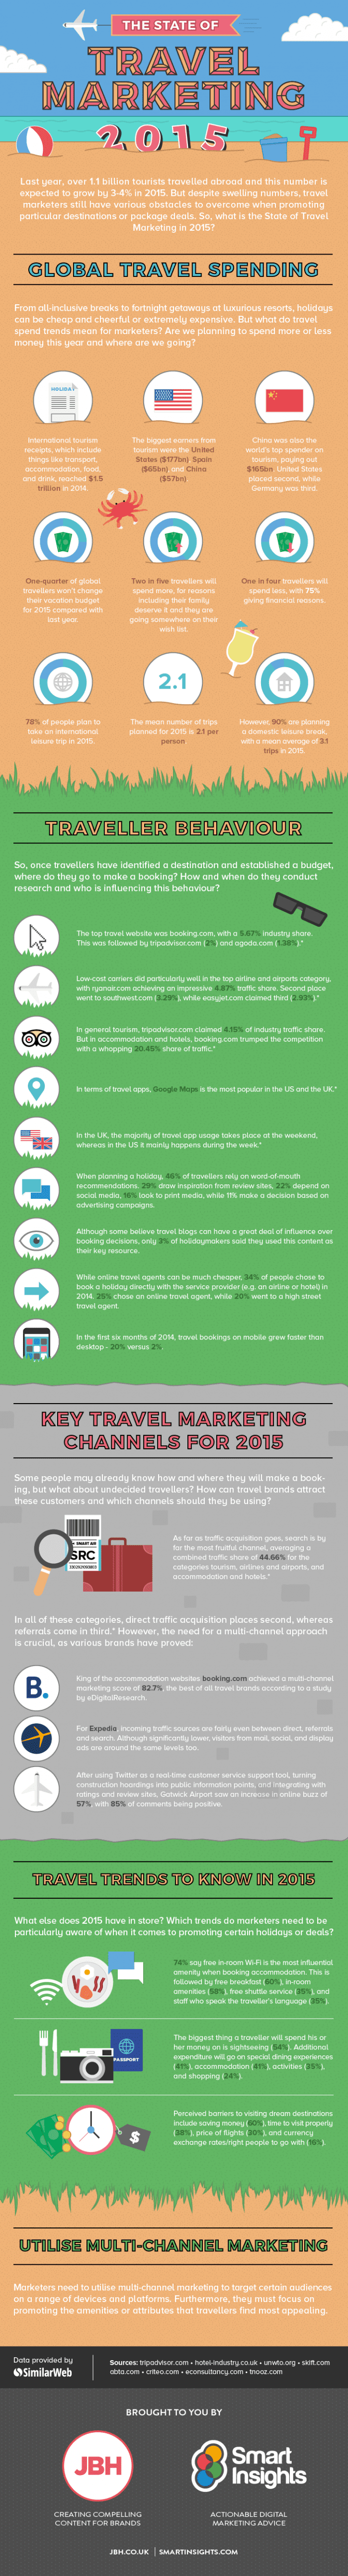 Travel marketing infographic 